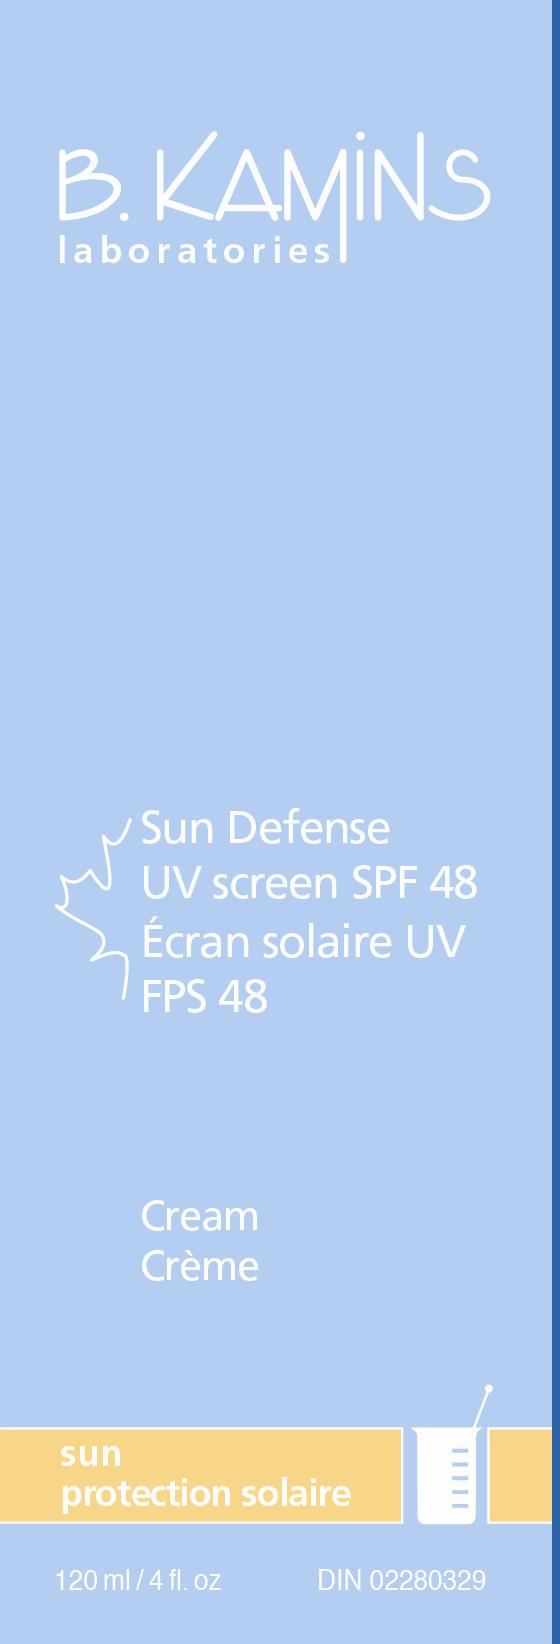 Sun Defense UV screen SPF front panel image